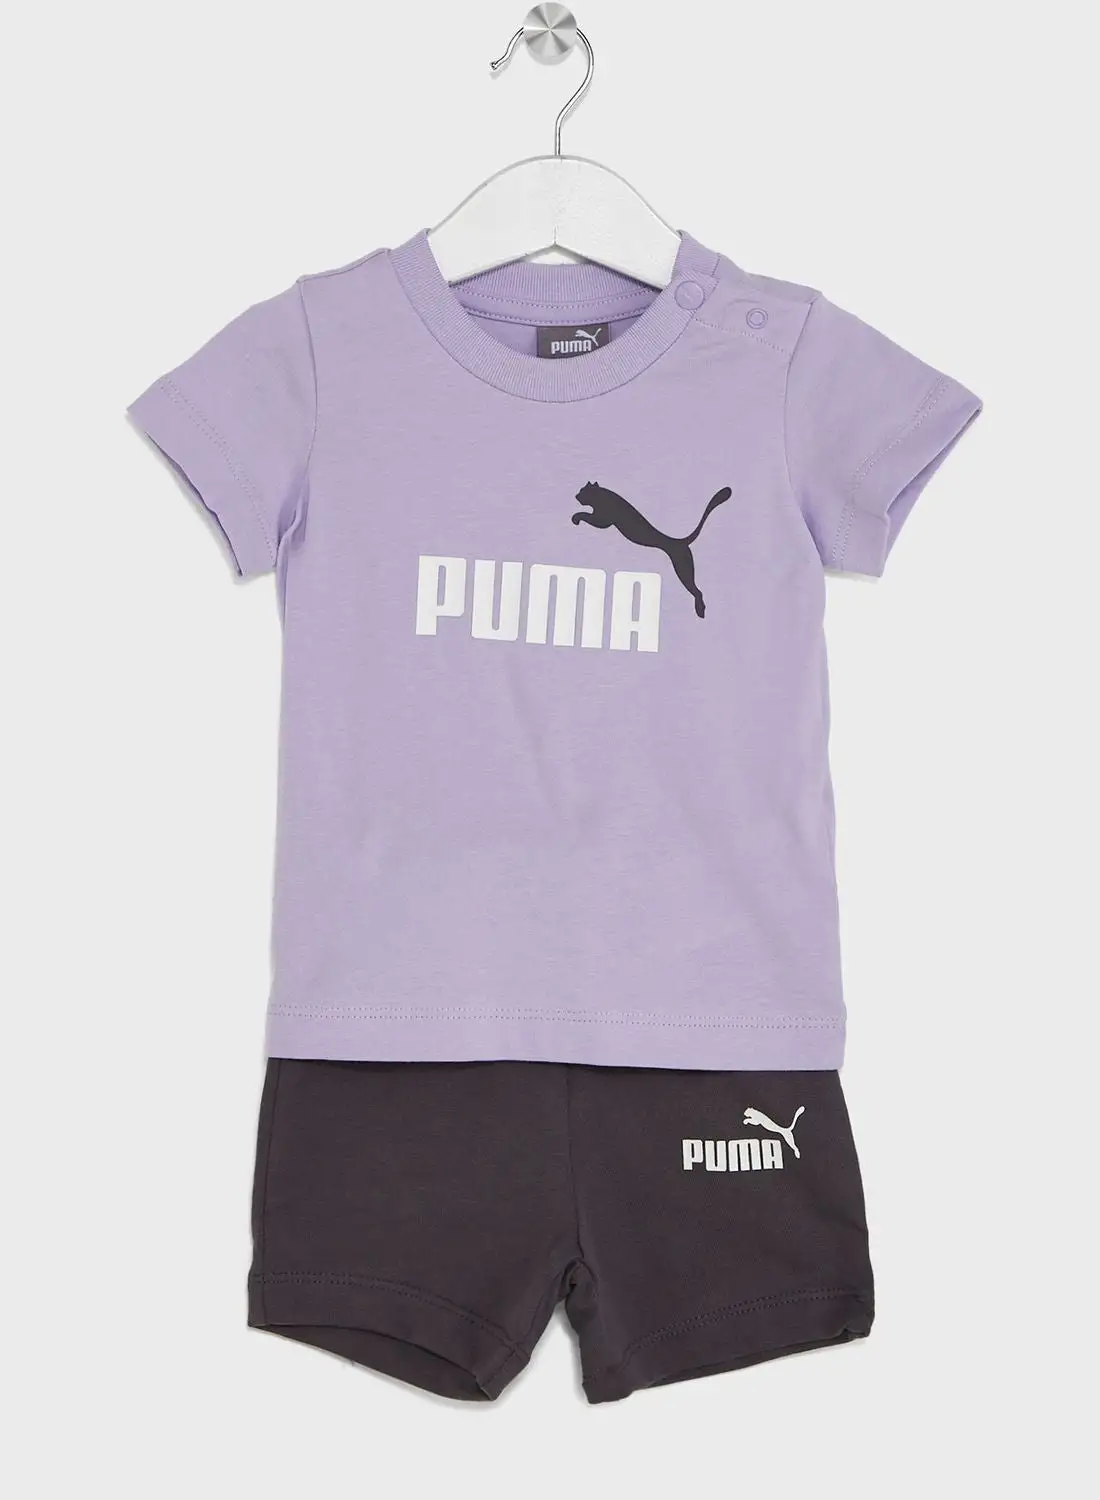 PUMA Infants Minicats Tee & Shorts Set